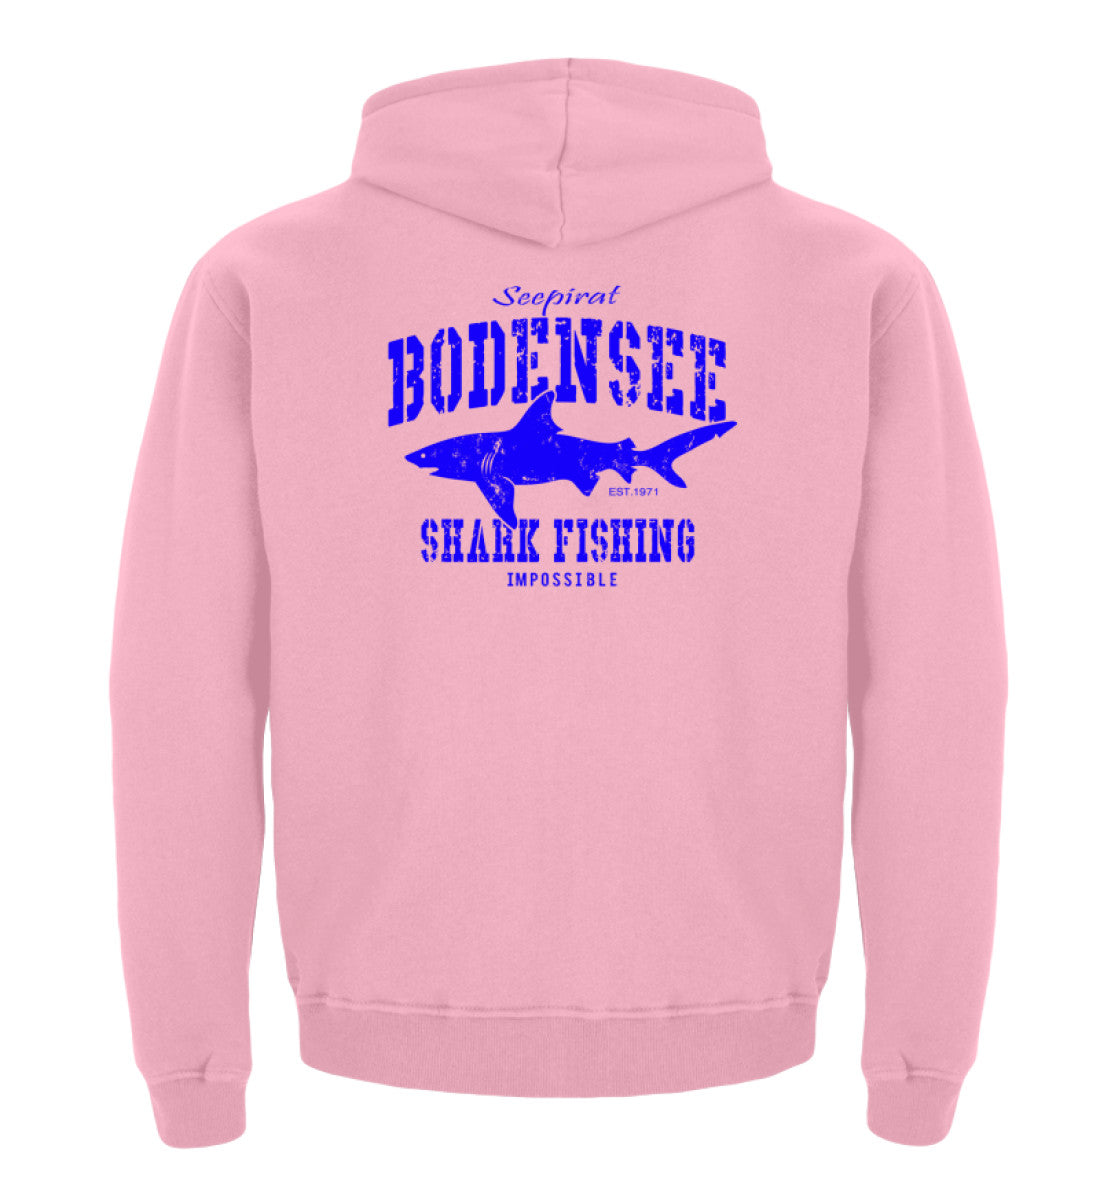 Seepirat Bodensee Shark Fishing Haie im See Kinder Hoodie Angeln im Bodensee pink